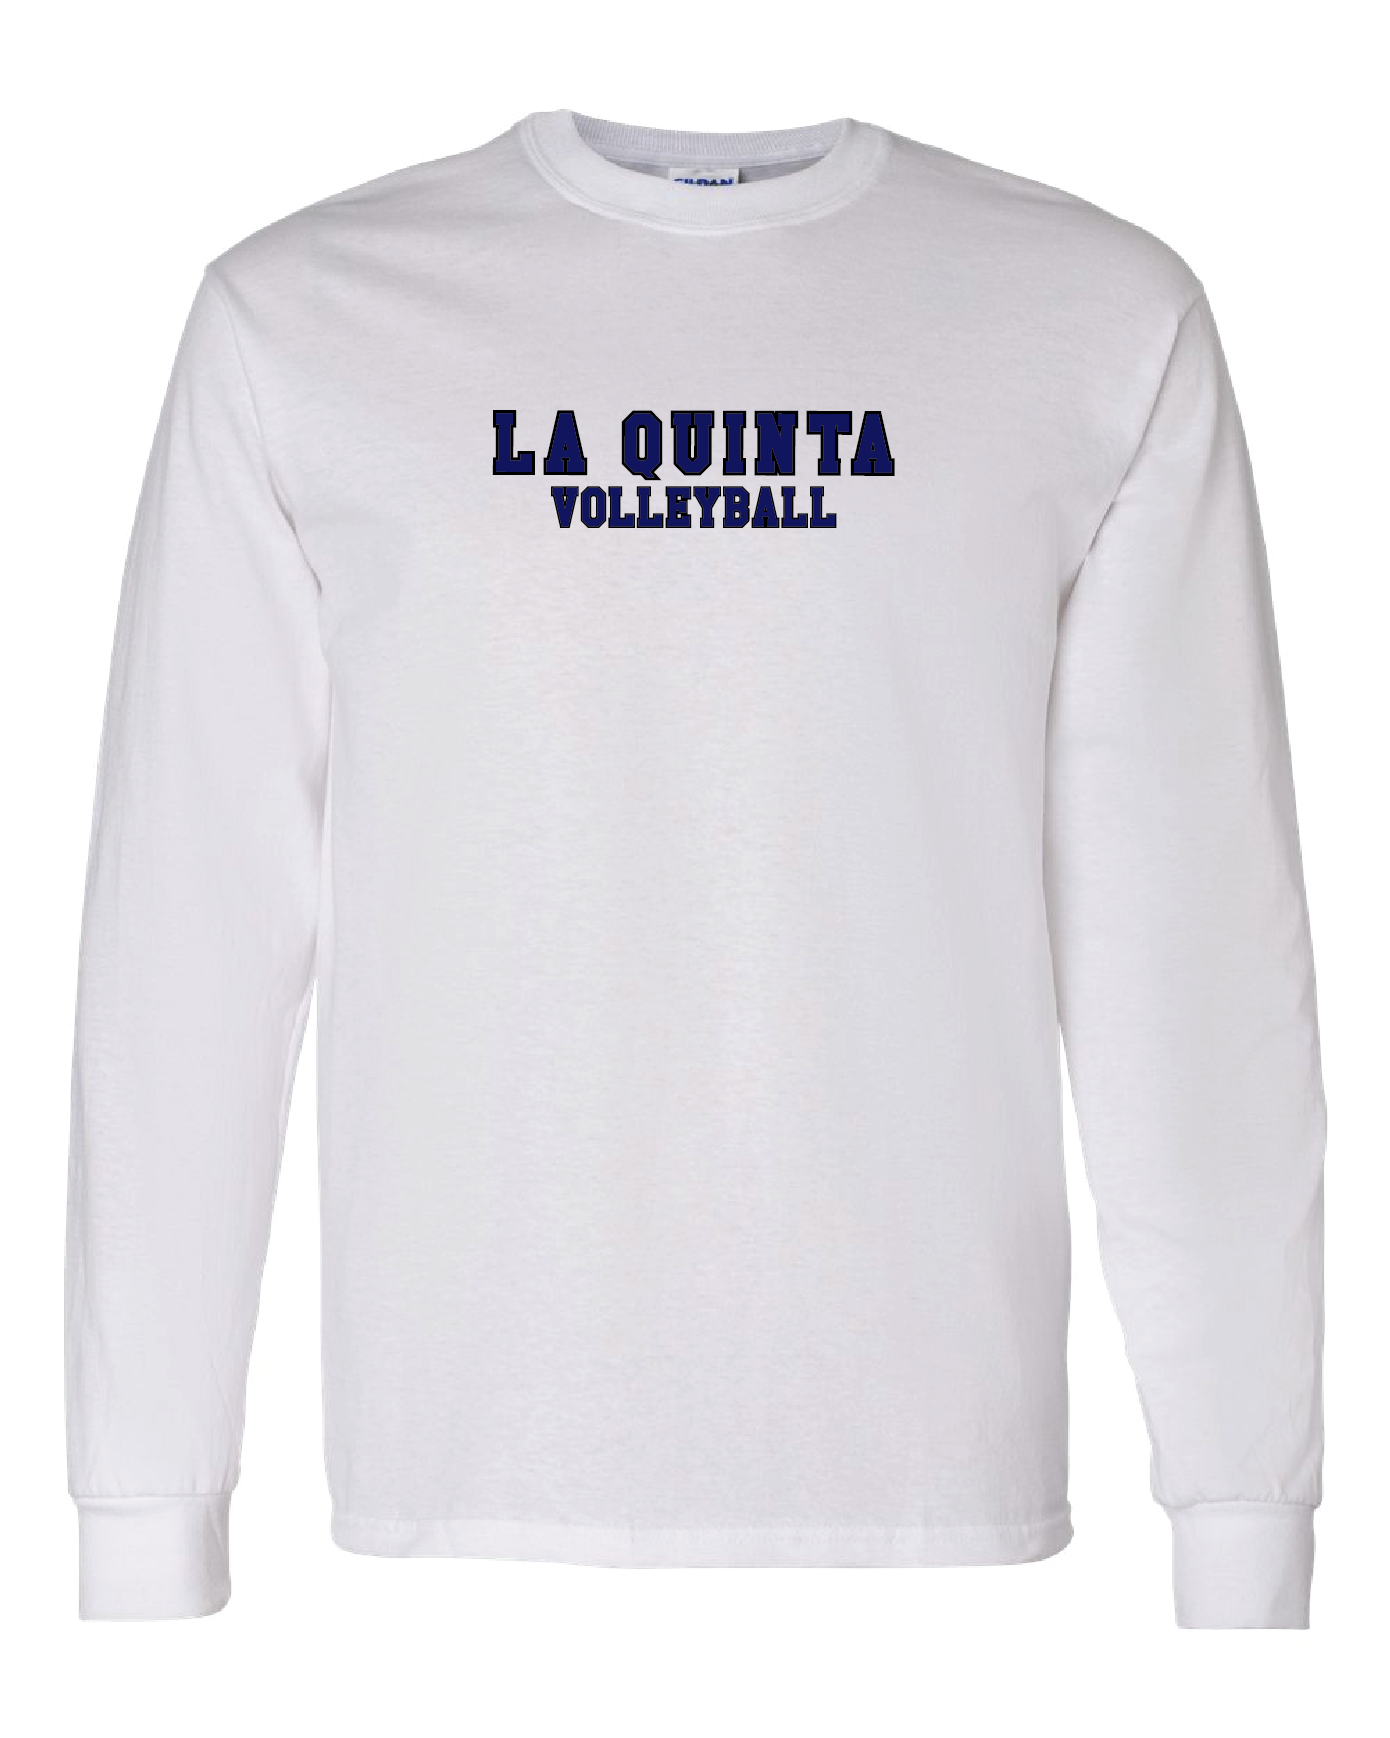 La Quinta Volleyball Unisex Long Sleeve COTTON Shirt